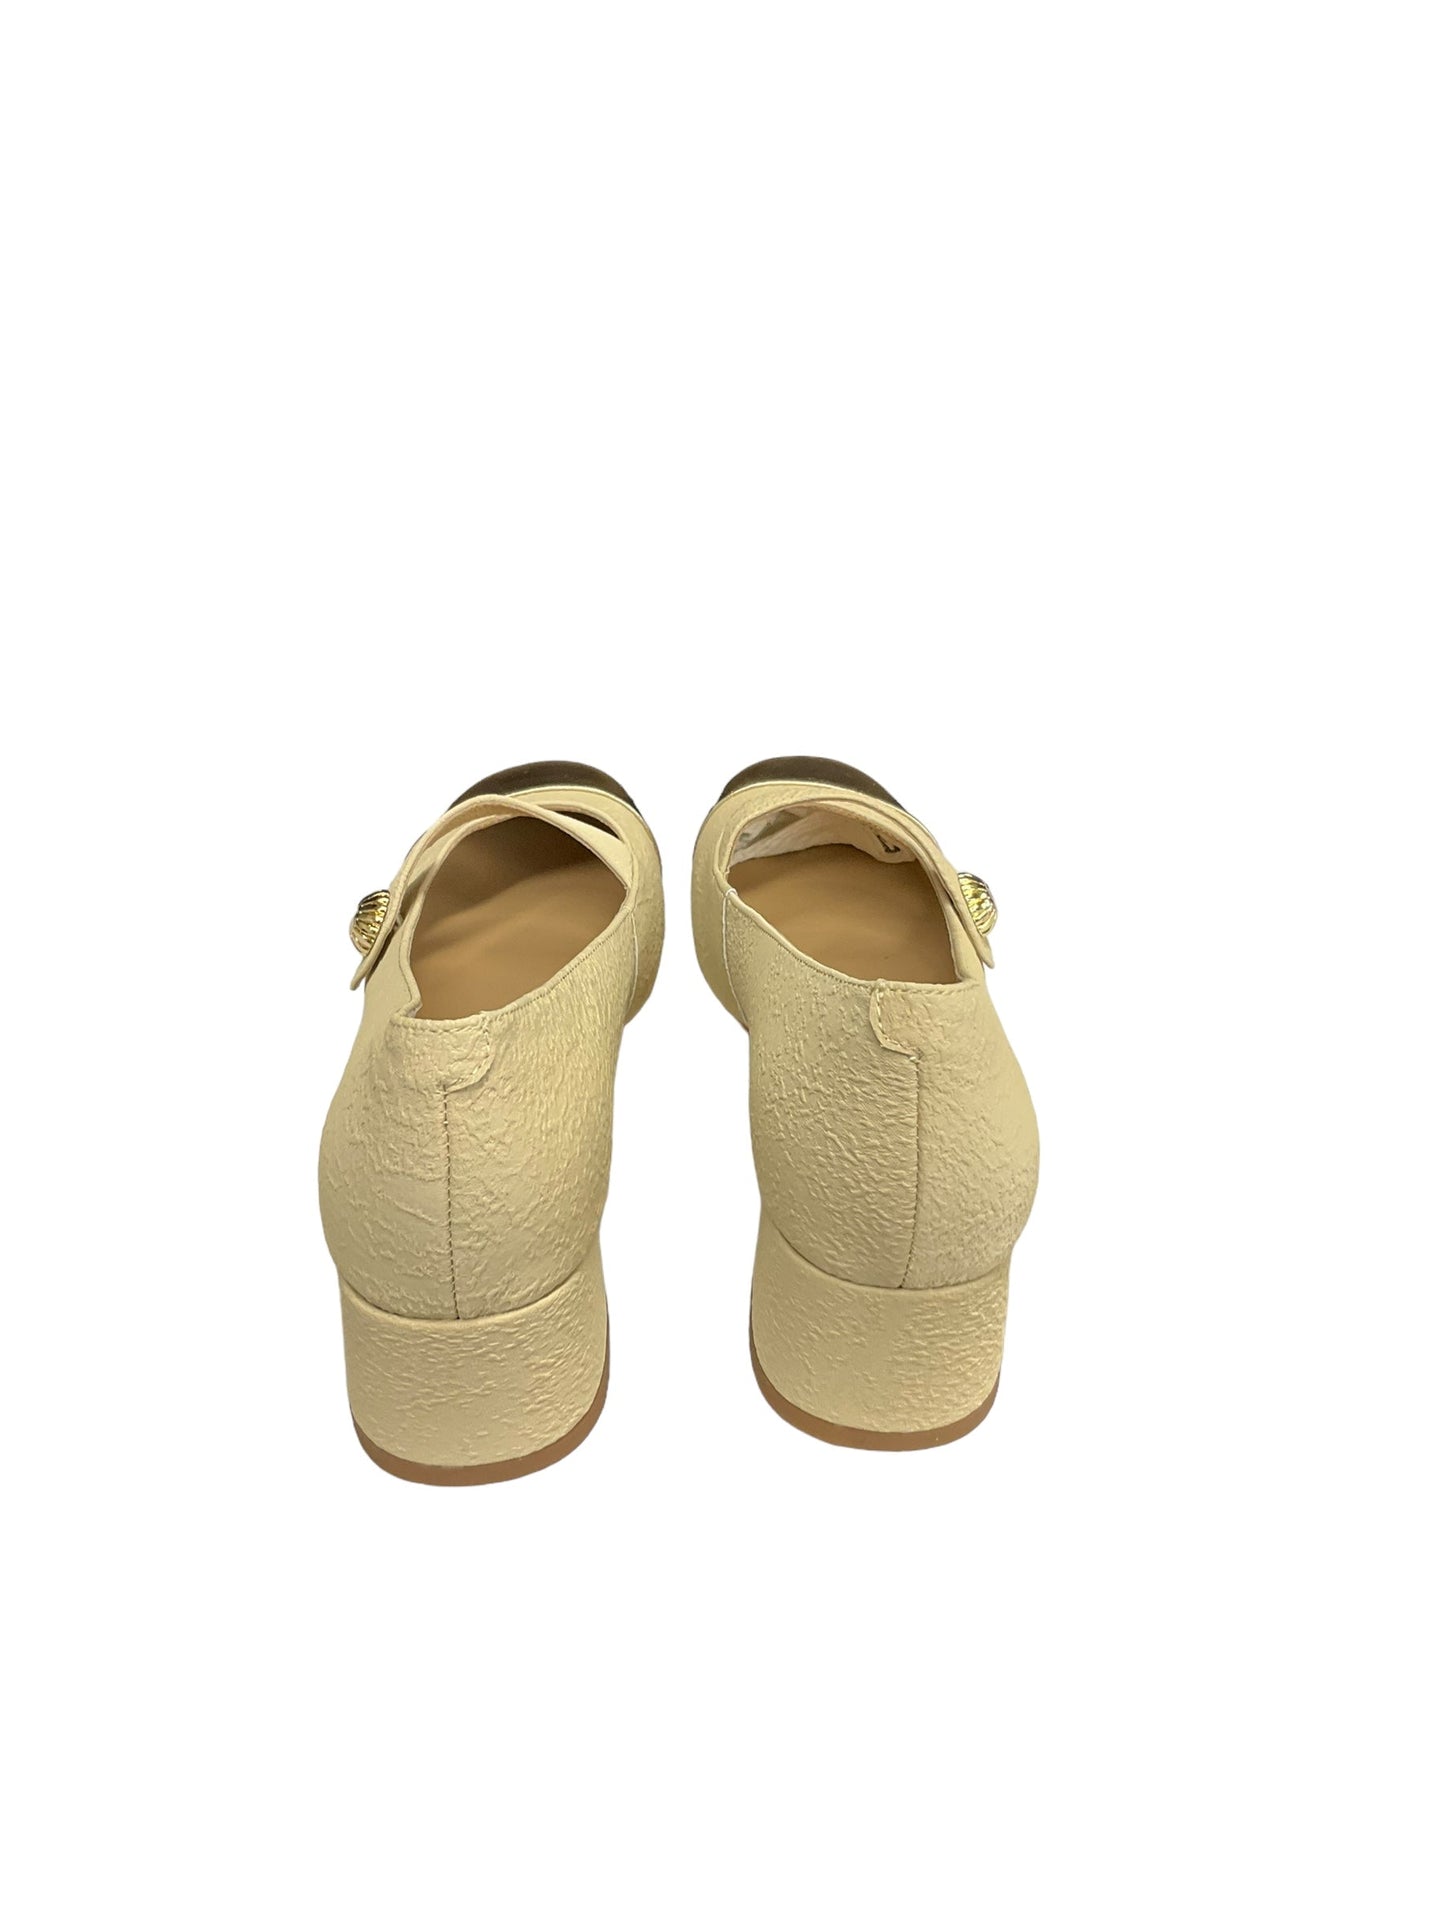 Cream Shoes Heels Block Clothes Mentor, Size 7